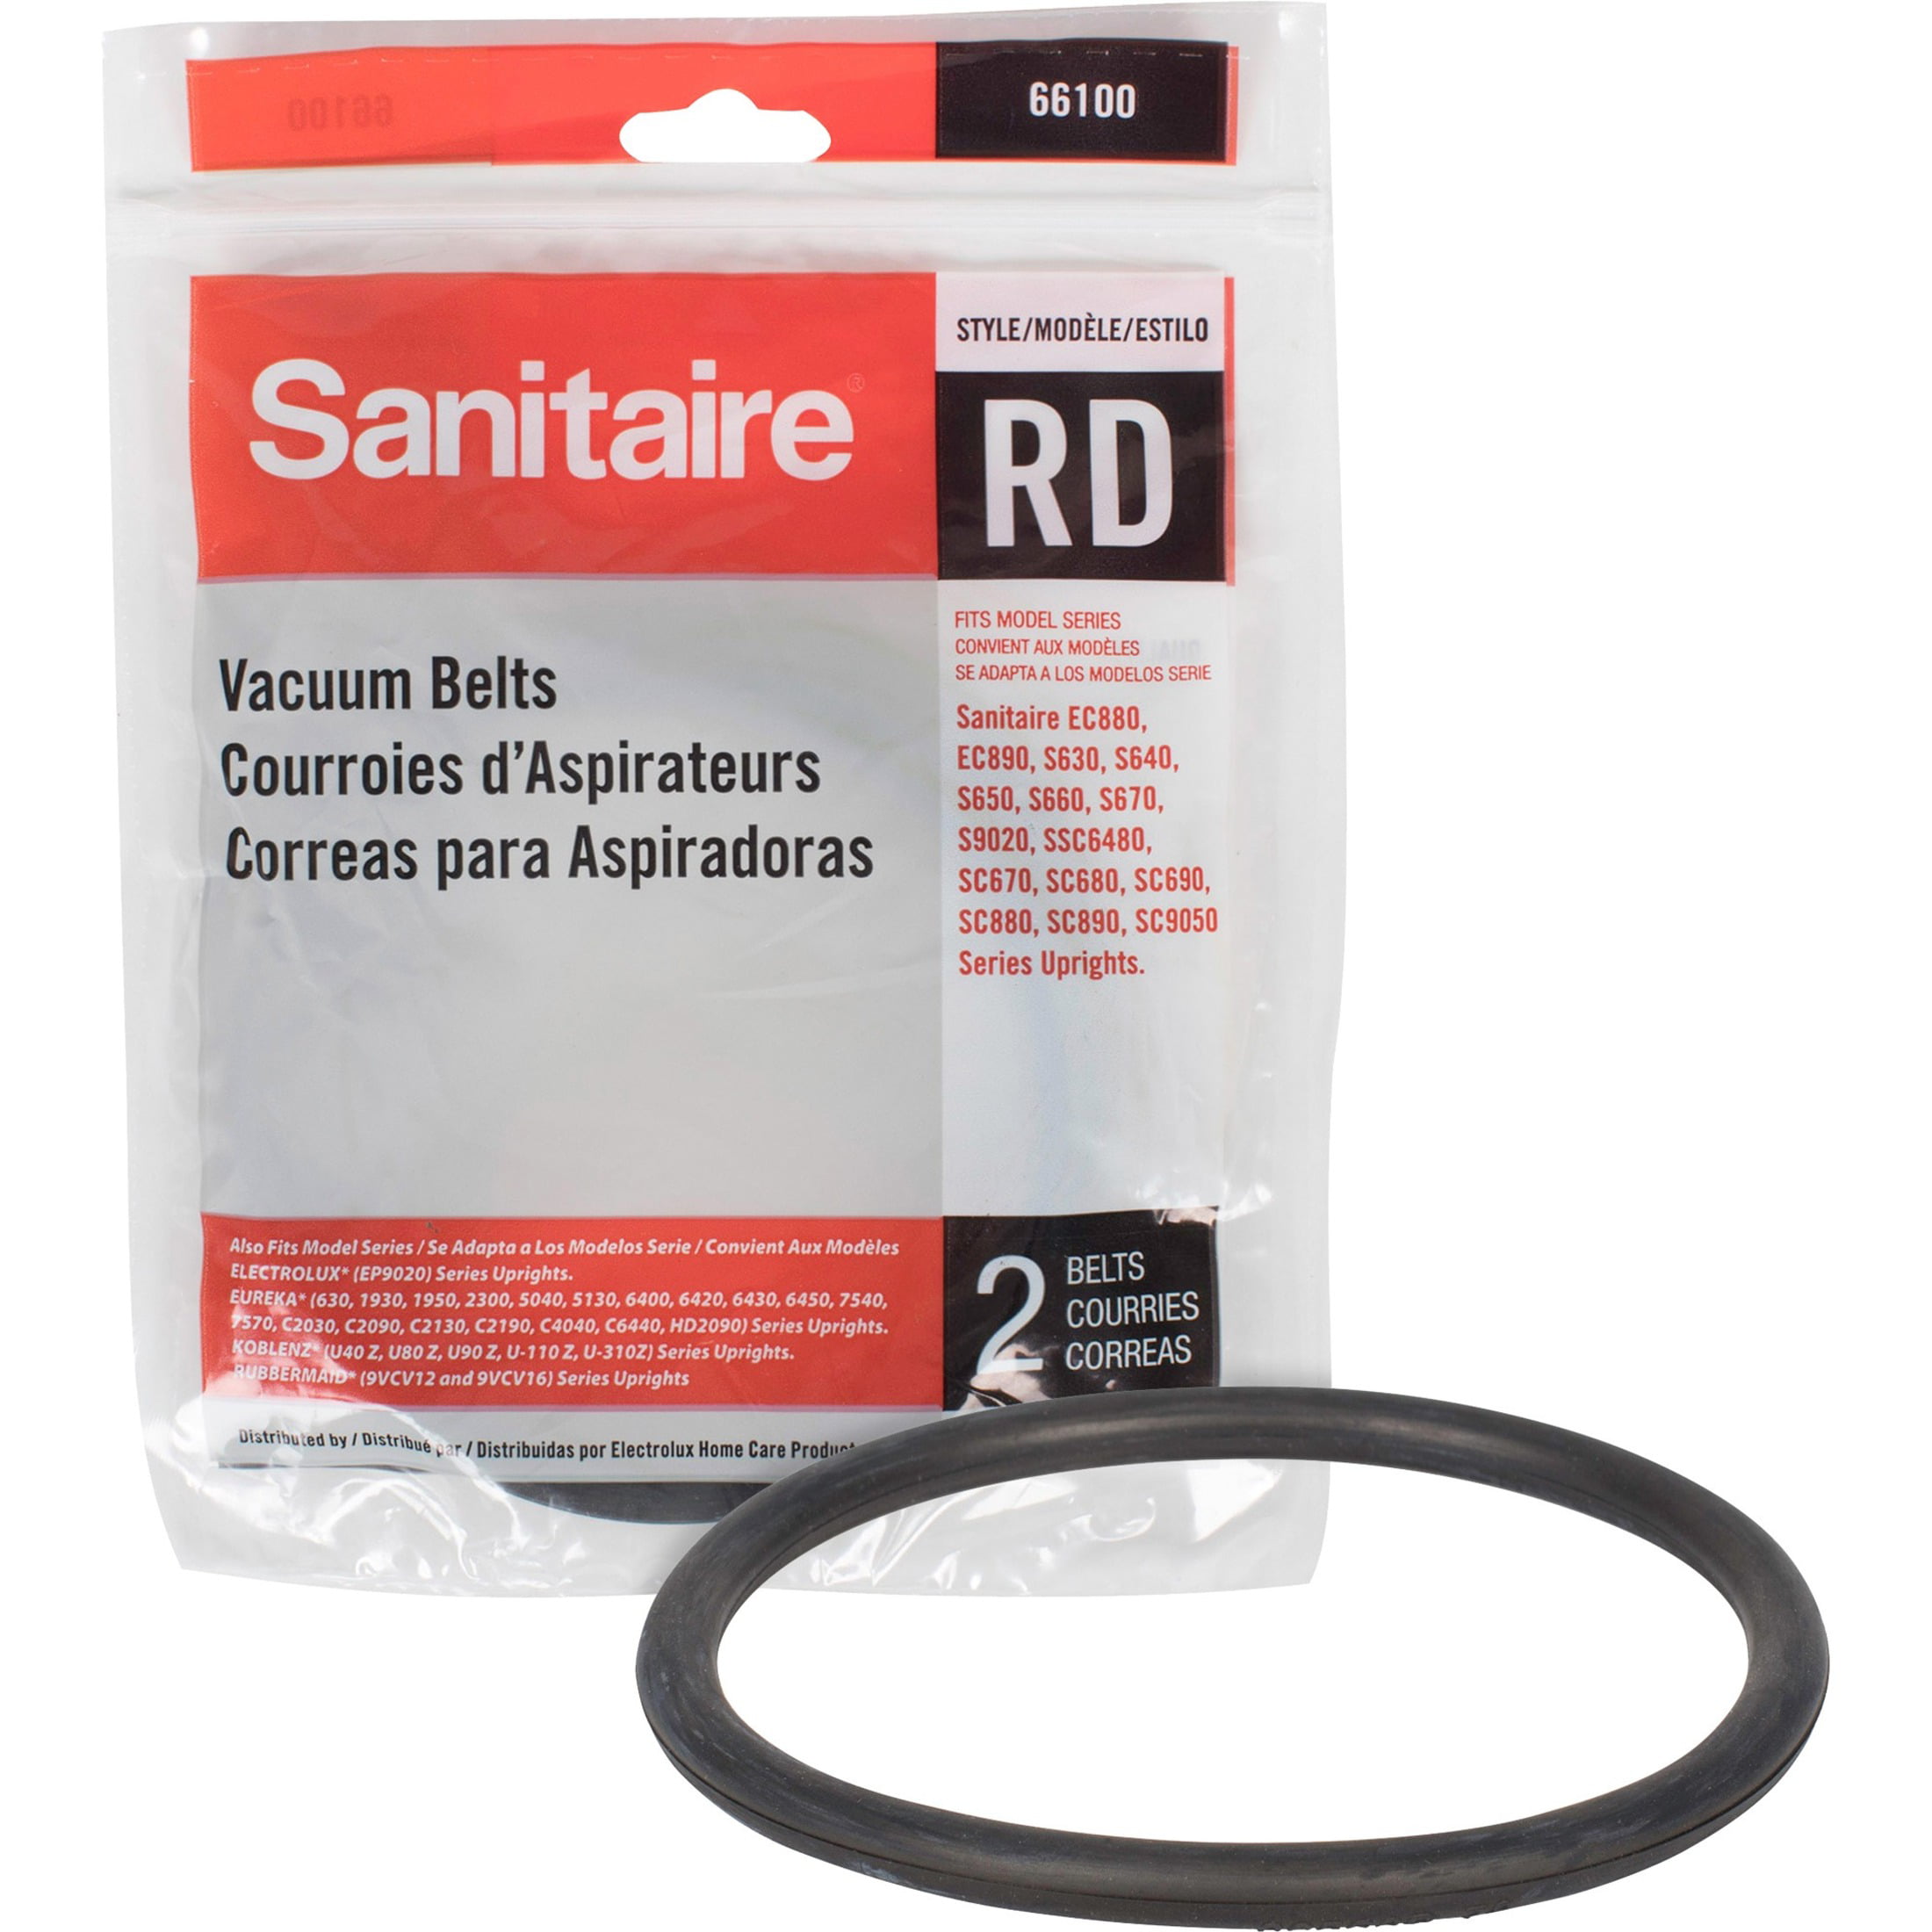 NEW Sanitaire Vacuum Model SC684  Round Belts 10 pack 